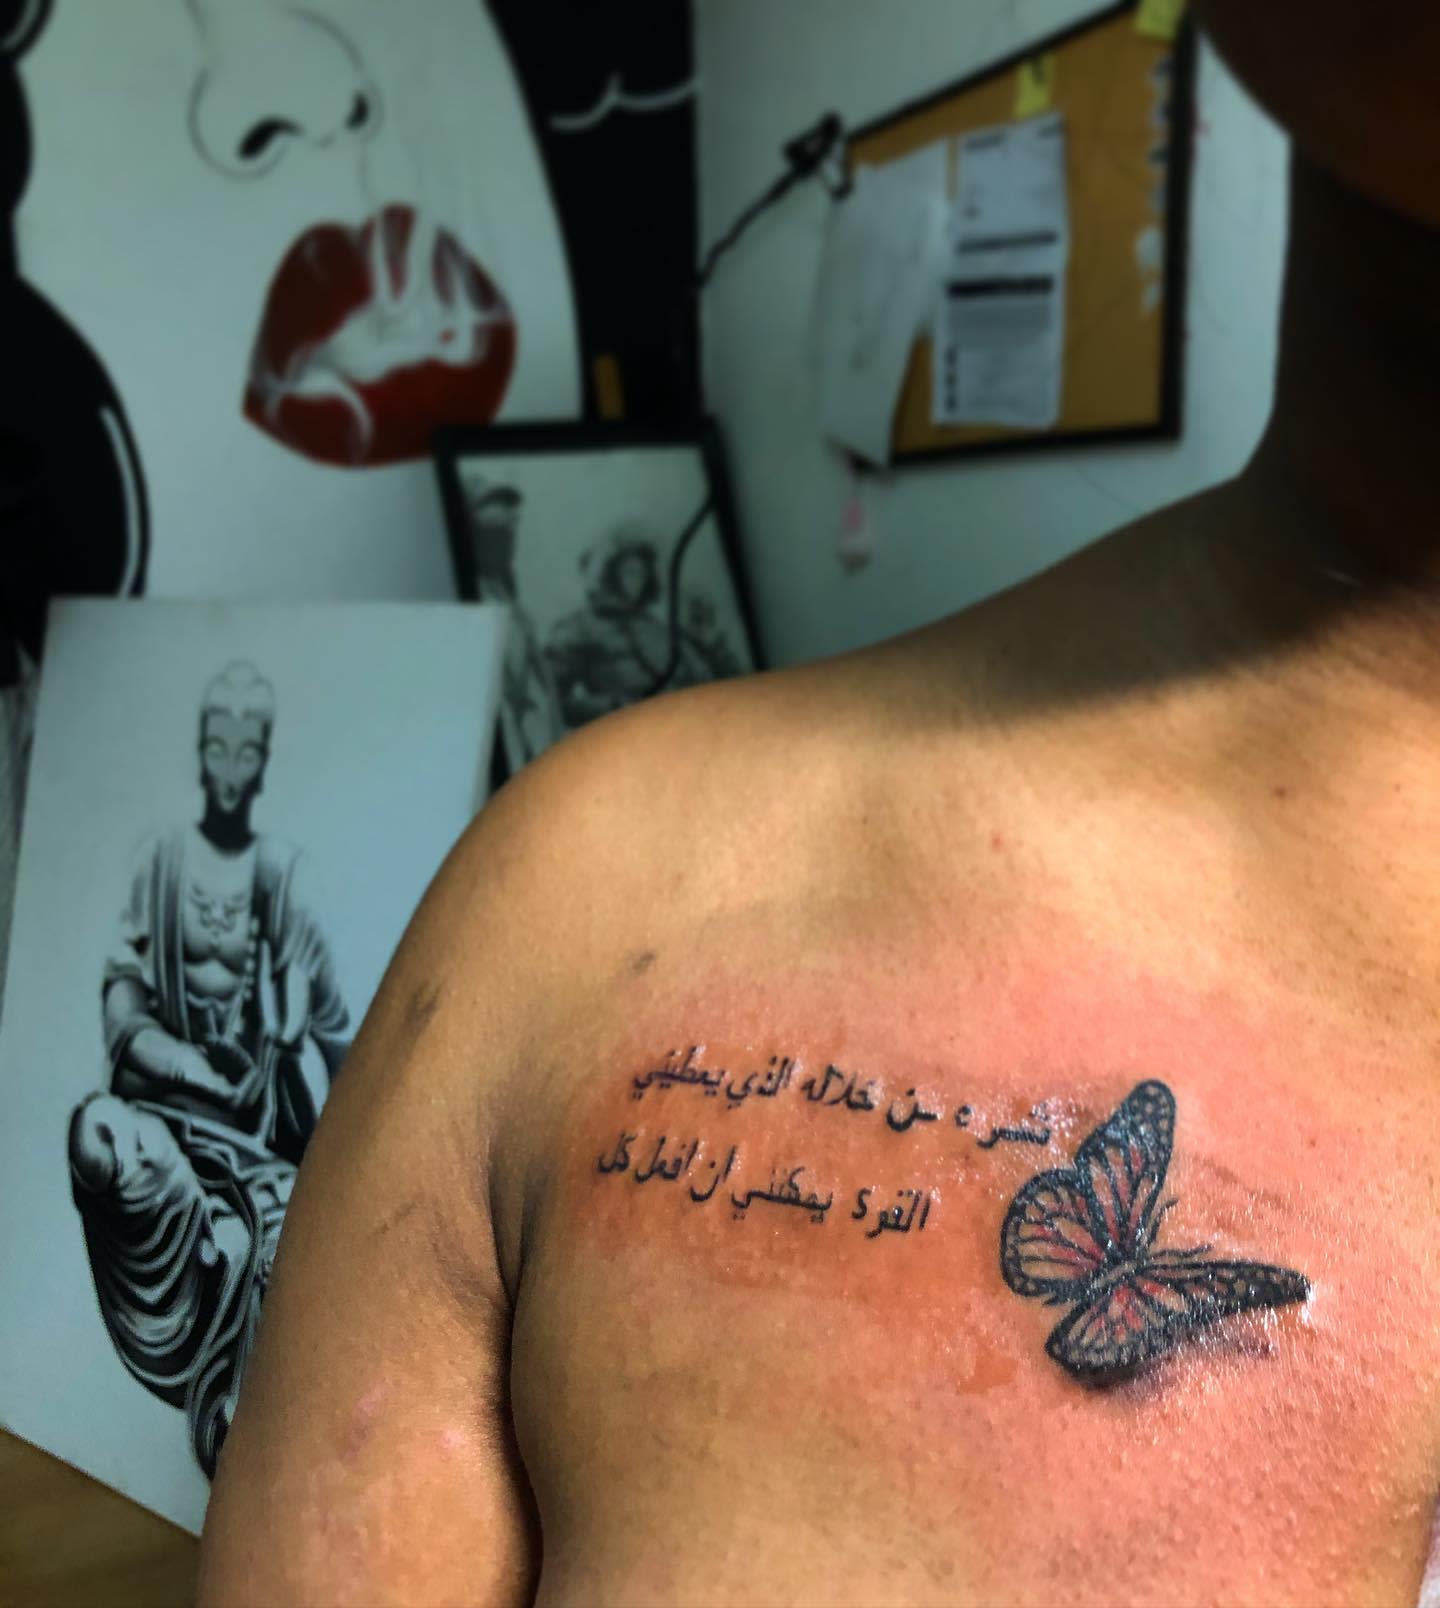 Tourist goes viral over Arabic tattoo in Morocco | news.com.au —  Australia's leading news site